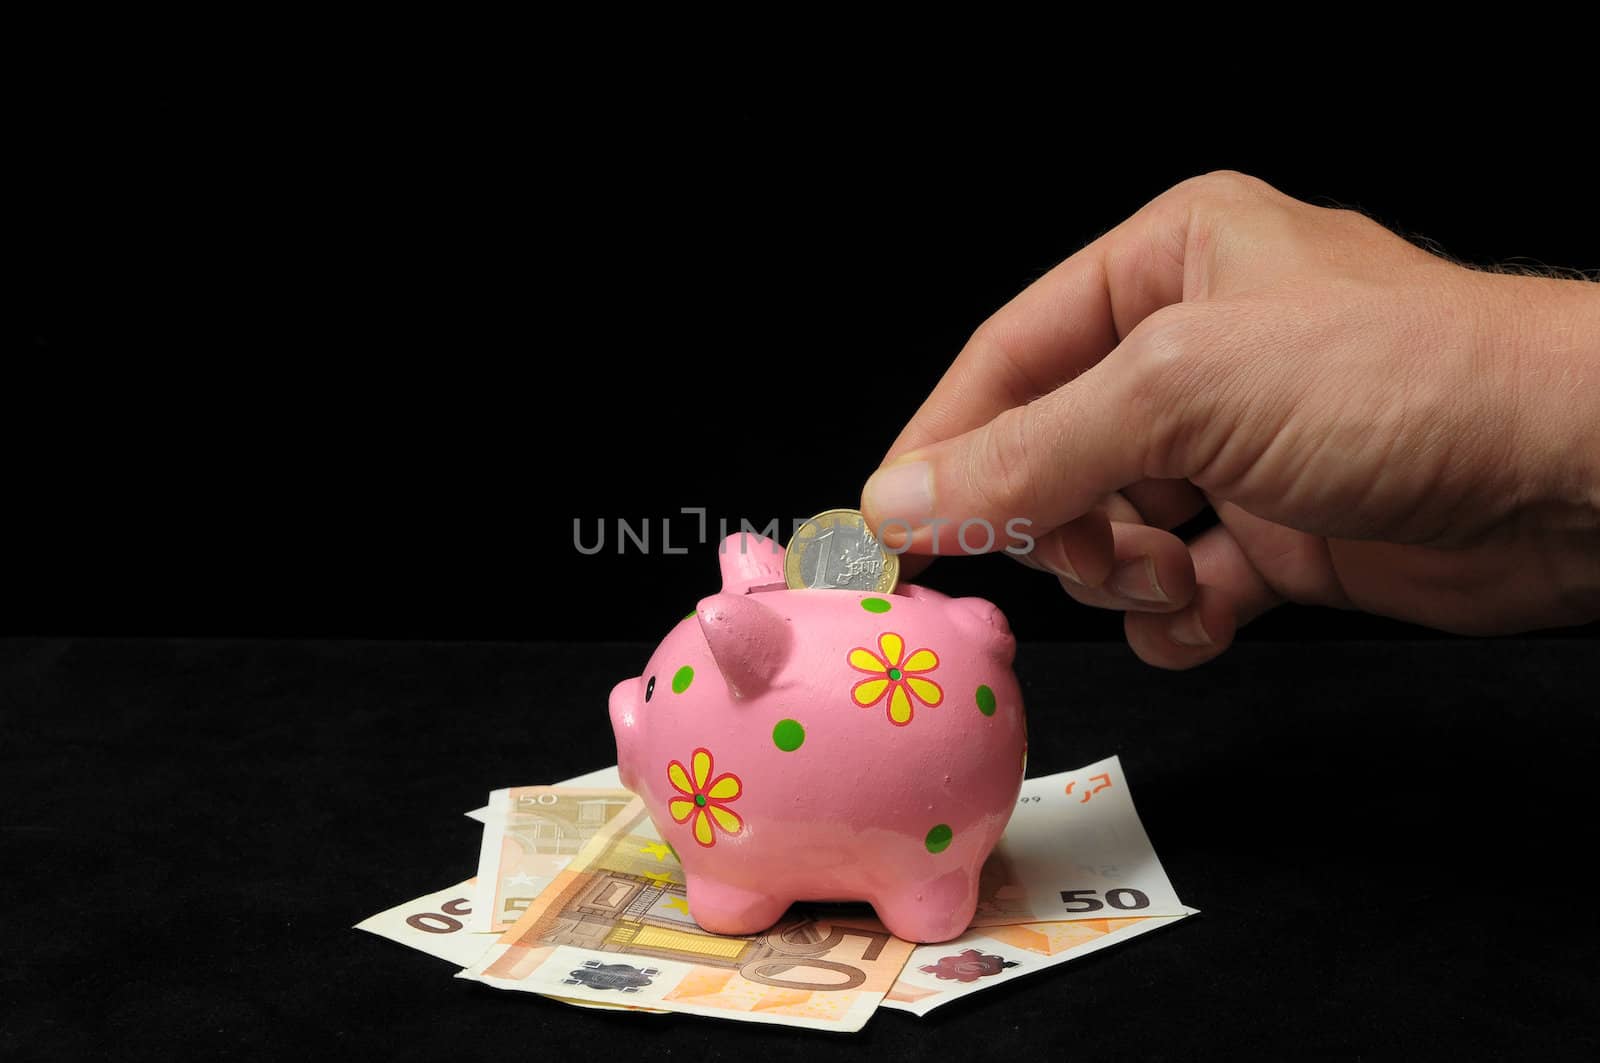  Pink Pig Piggy Bank by underworld